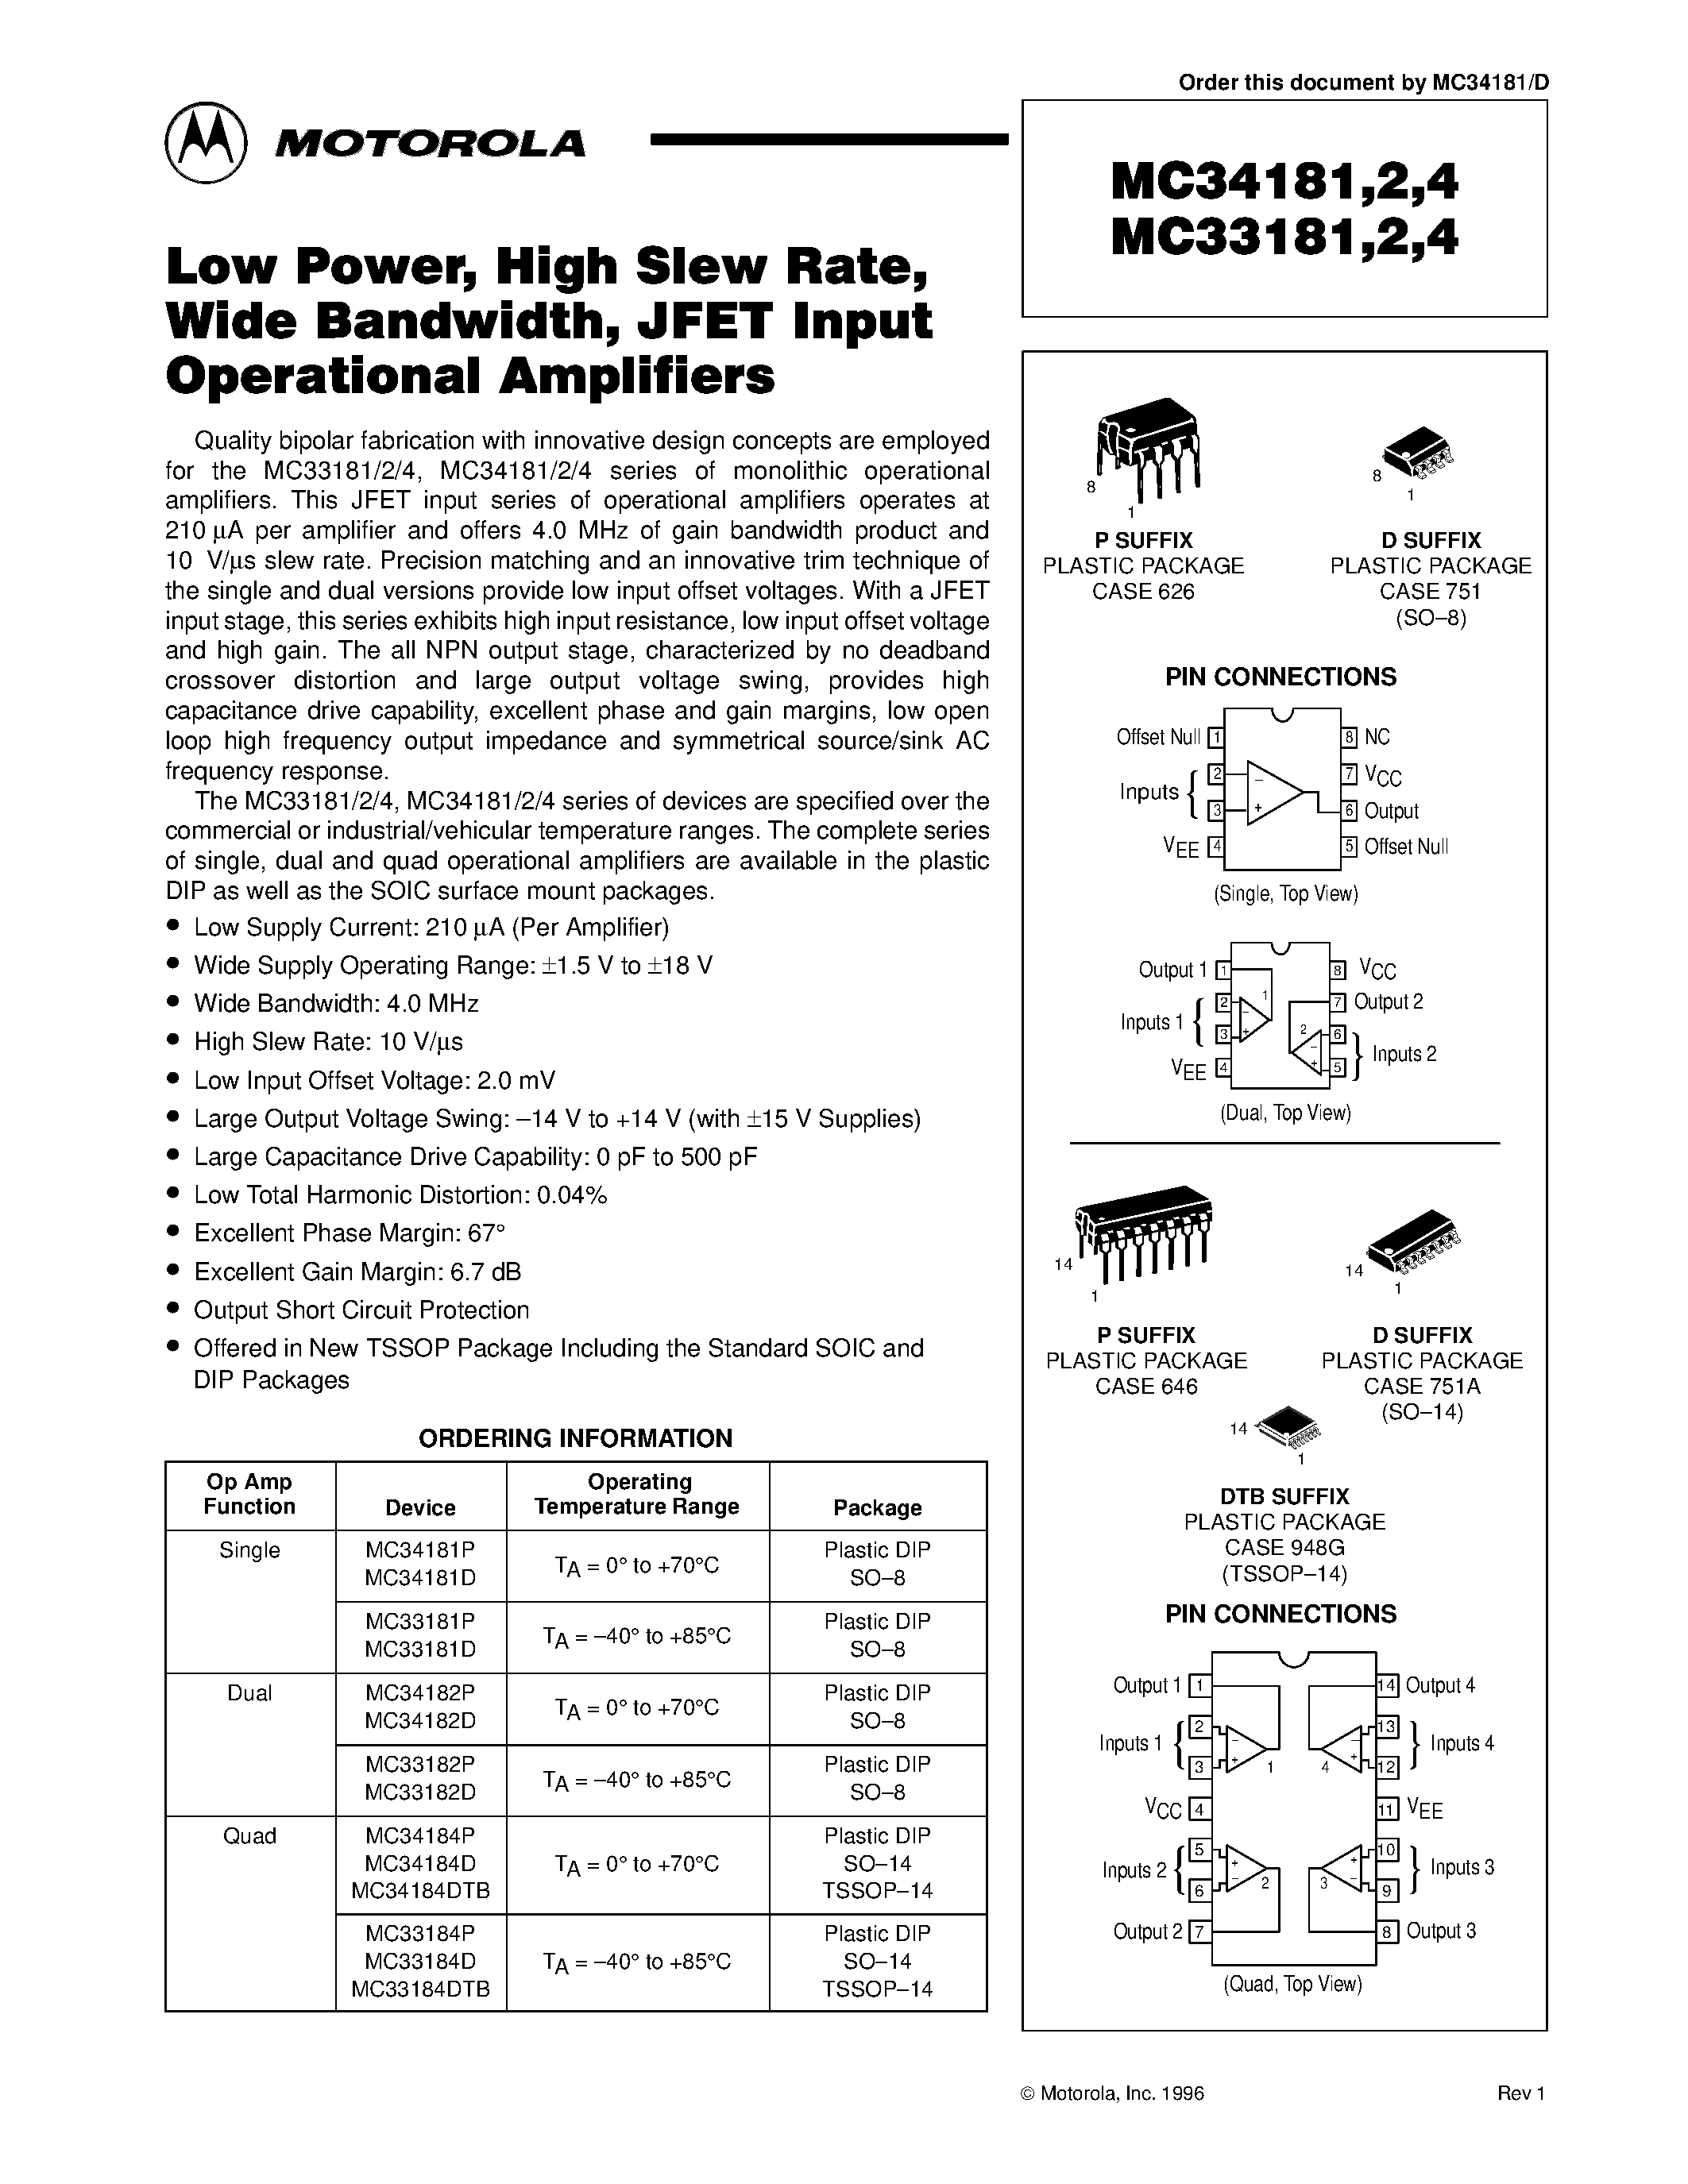 Datasheet MC33181 - (MC33181 - MC33184) Low Power / High Slew Rate / Wide Bandwidth / JFET Input Operational Amplifiers page 1